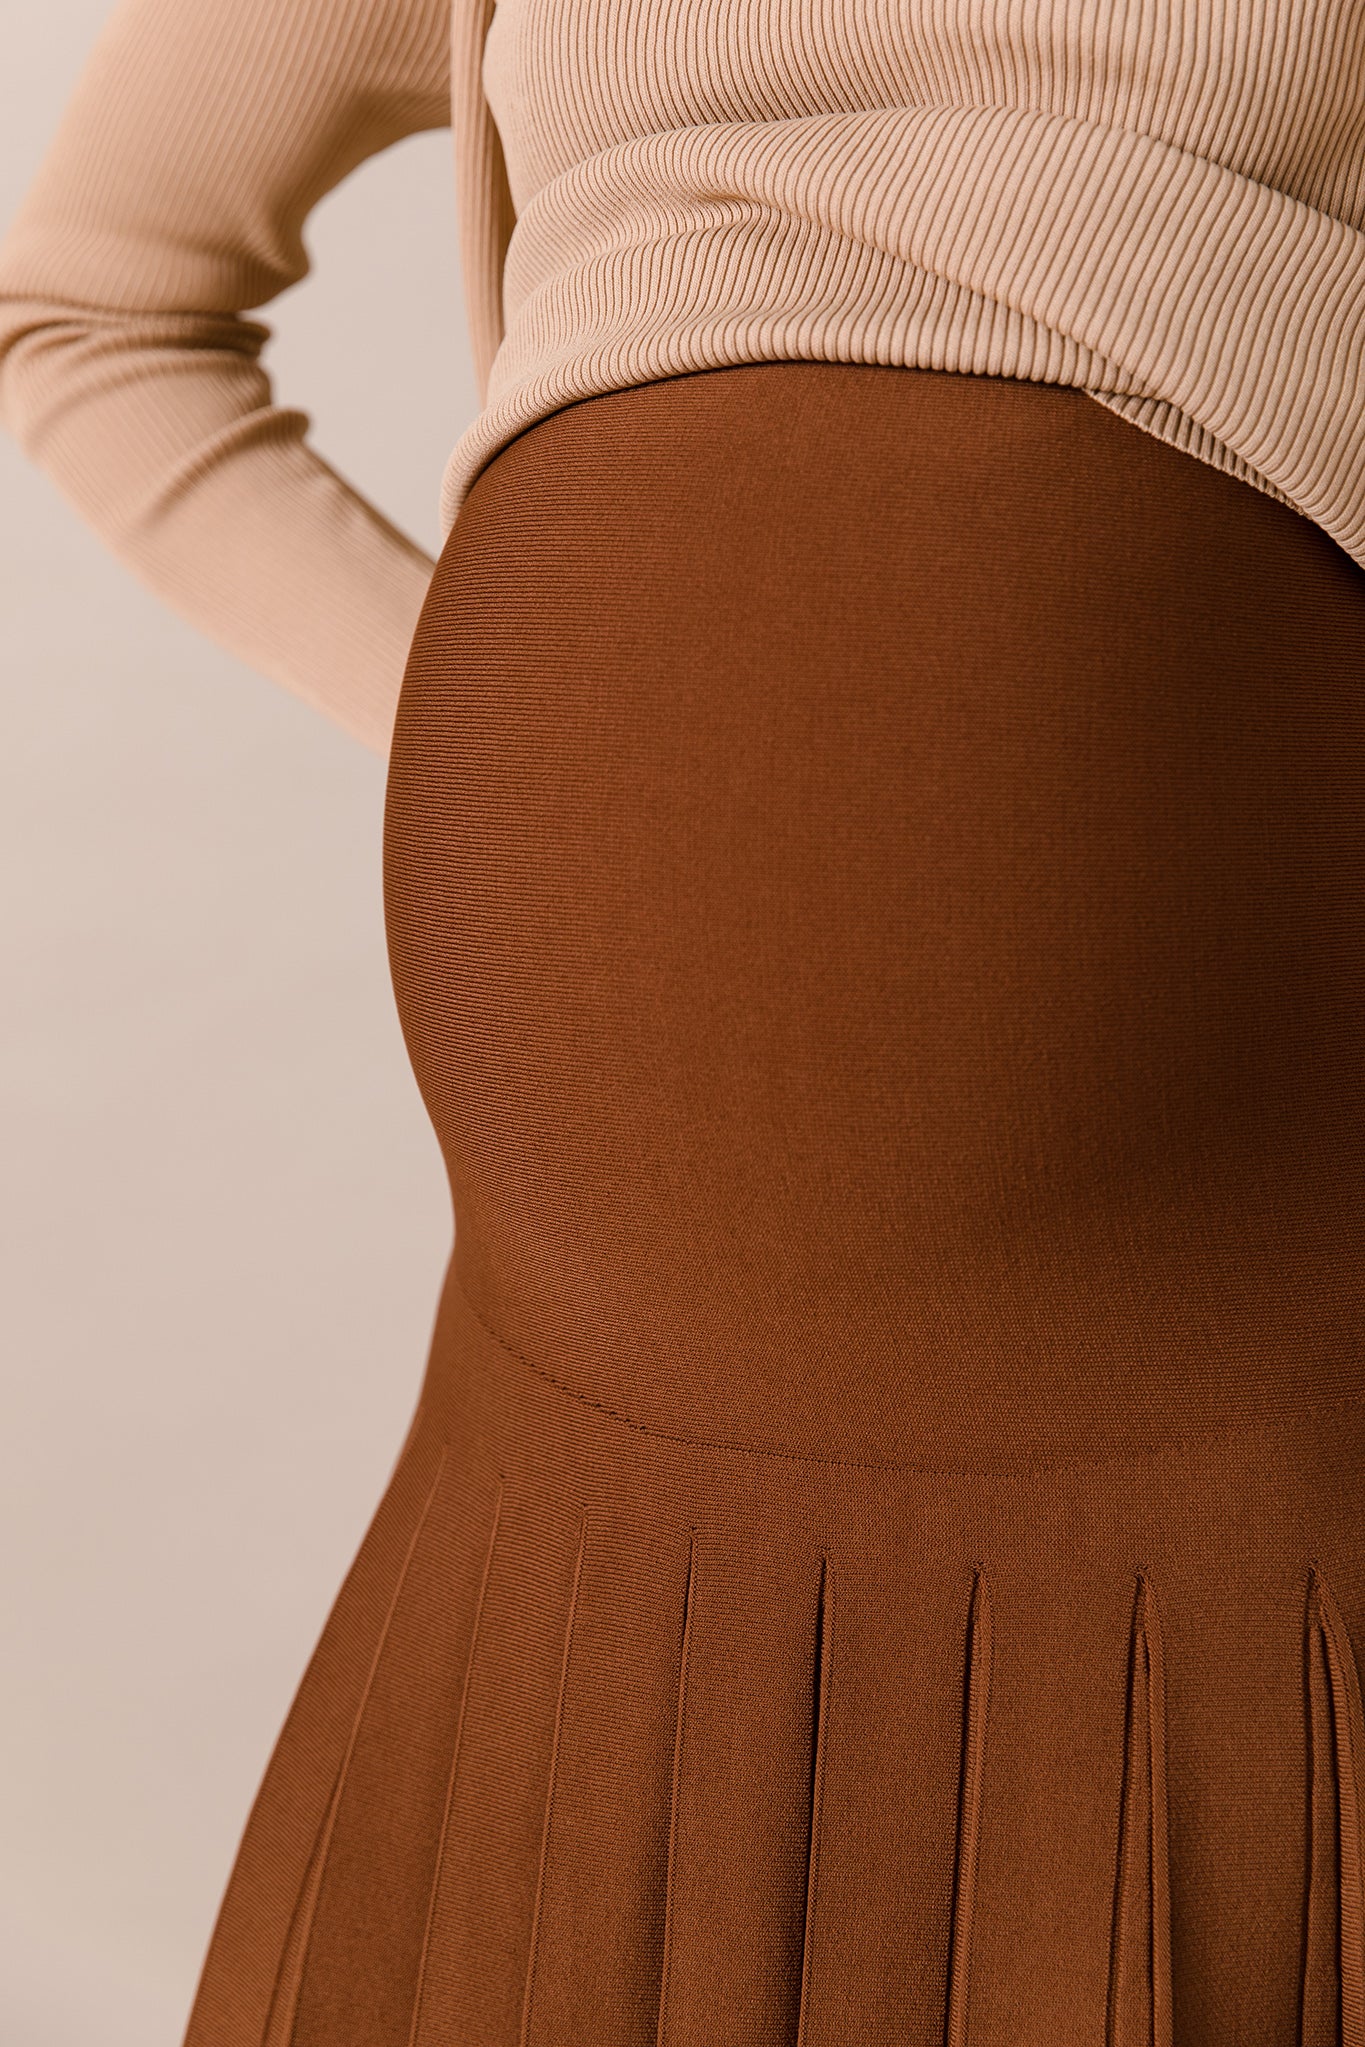 The Maternity Infinity Skirt in Caramel